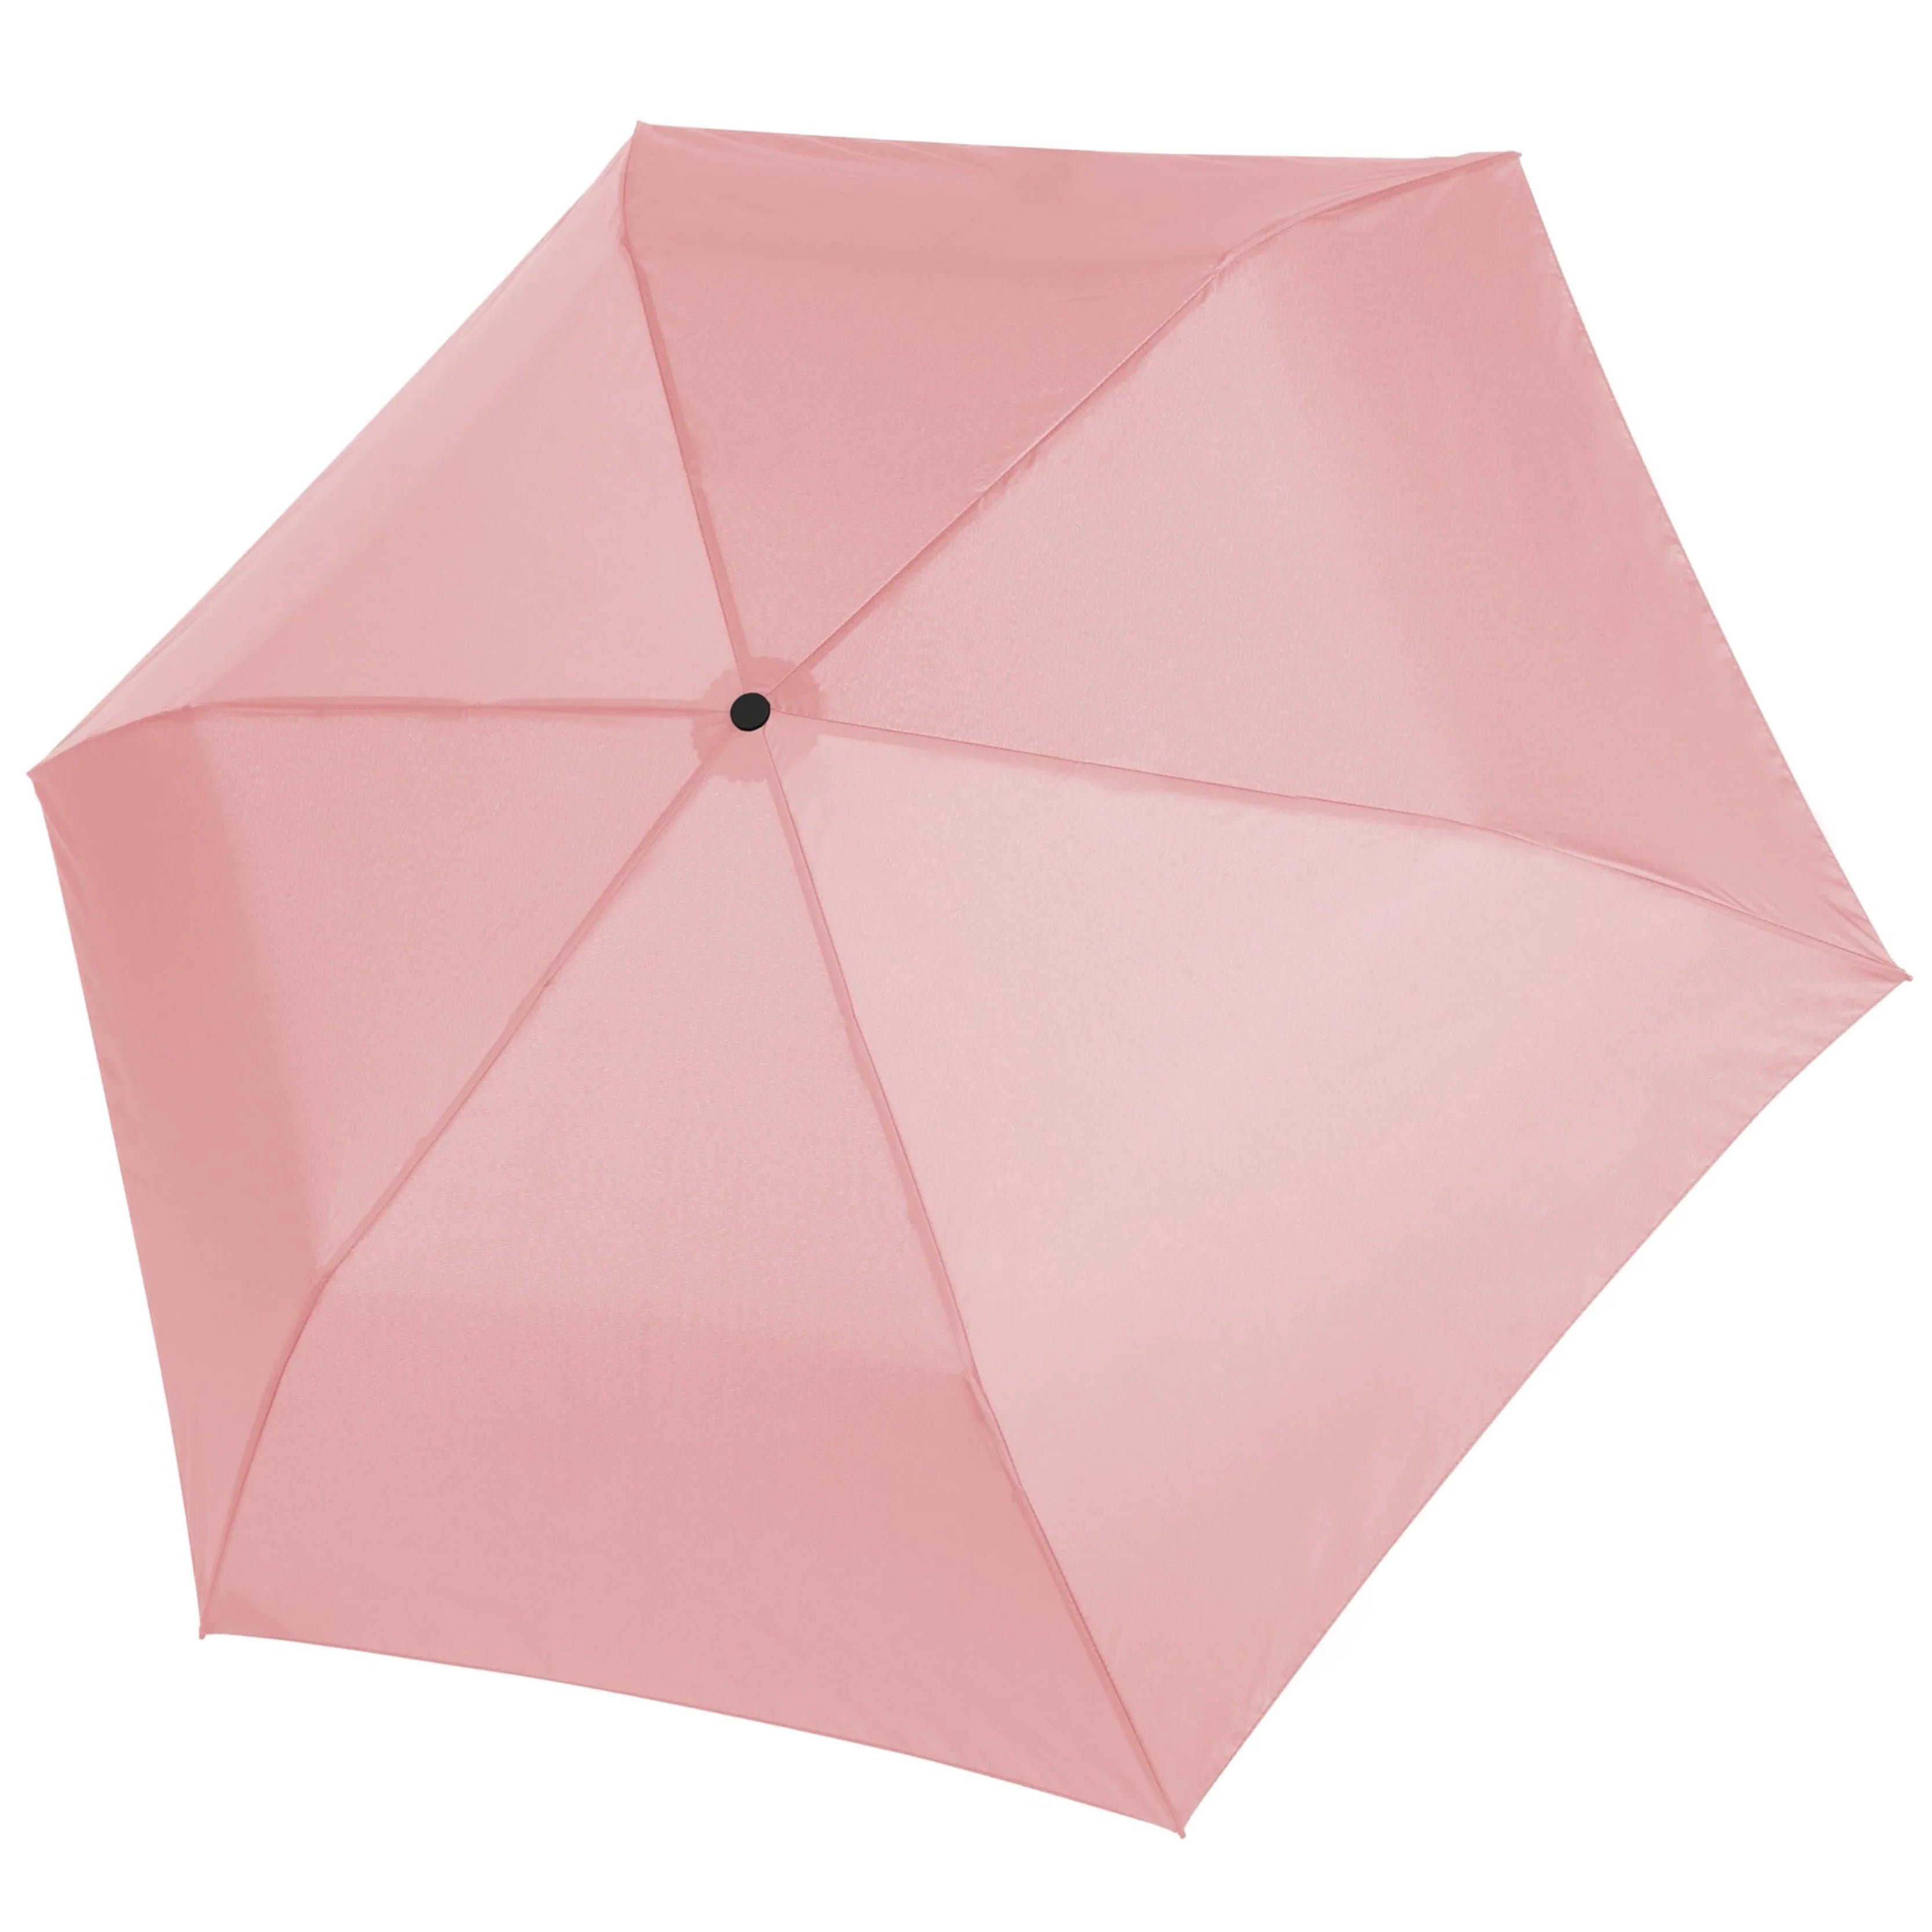 Doppler pocket umbrellas Zero Magic - rose shadow